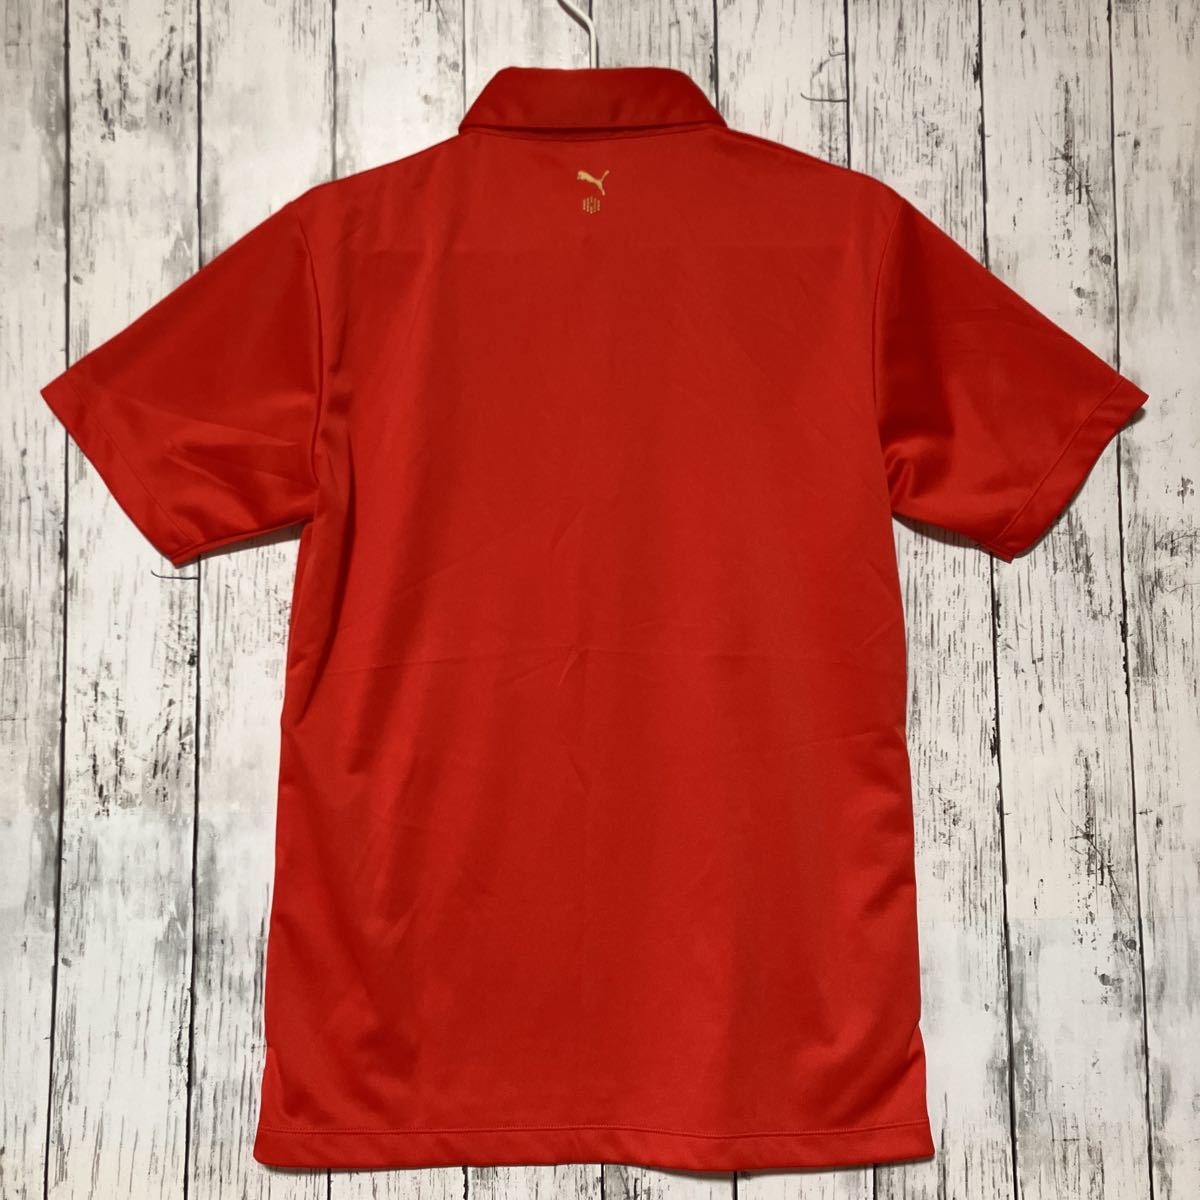 PUMA GOLF】プーマゴルフ メンズ 半袖ポロシャツ Mサイズ 赤 送料無料